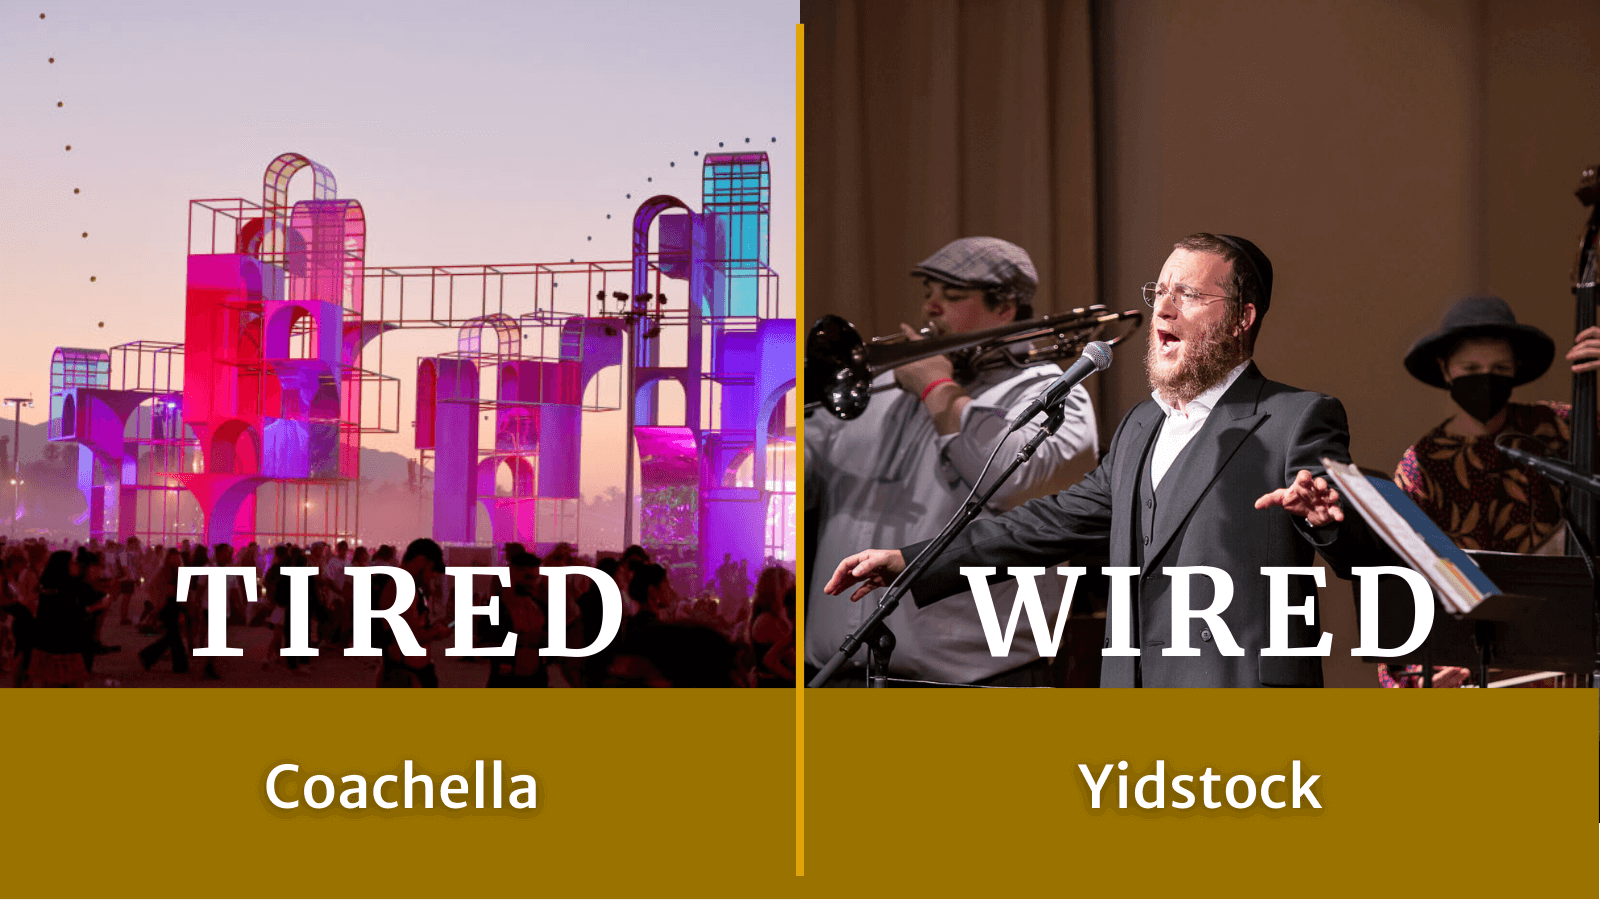 Tired: Coachella. Wired: Yidstock.